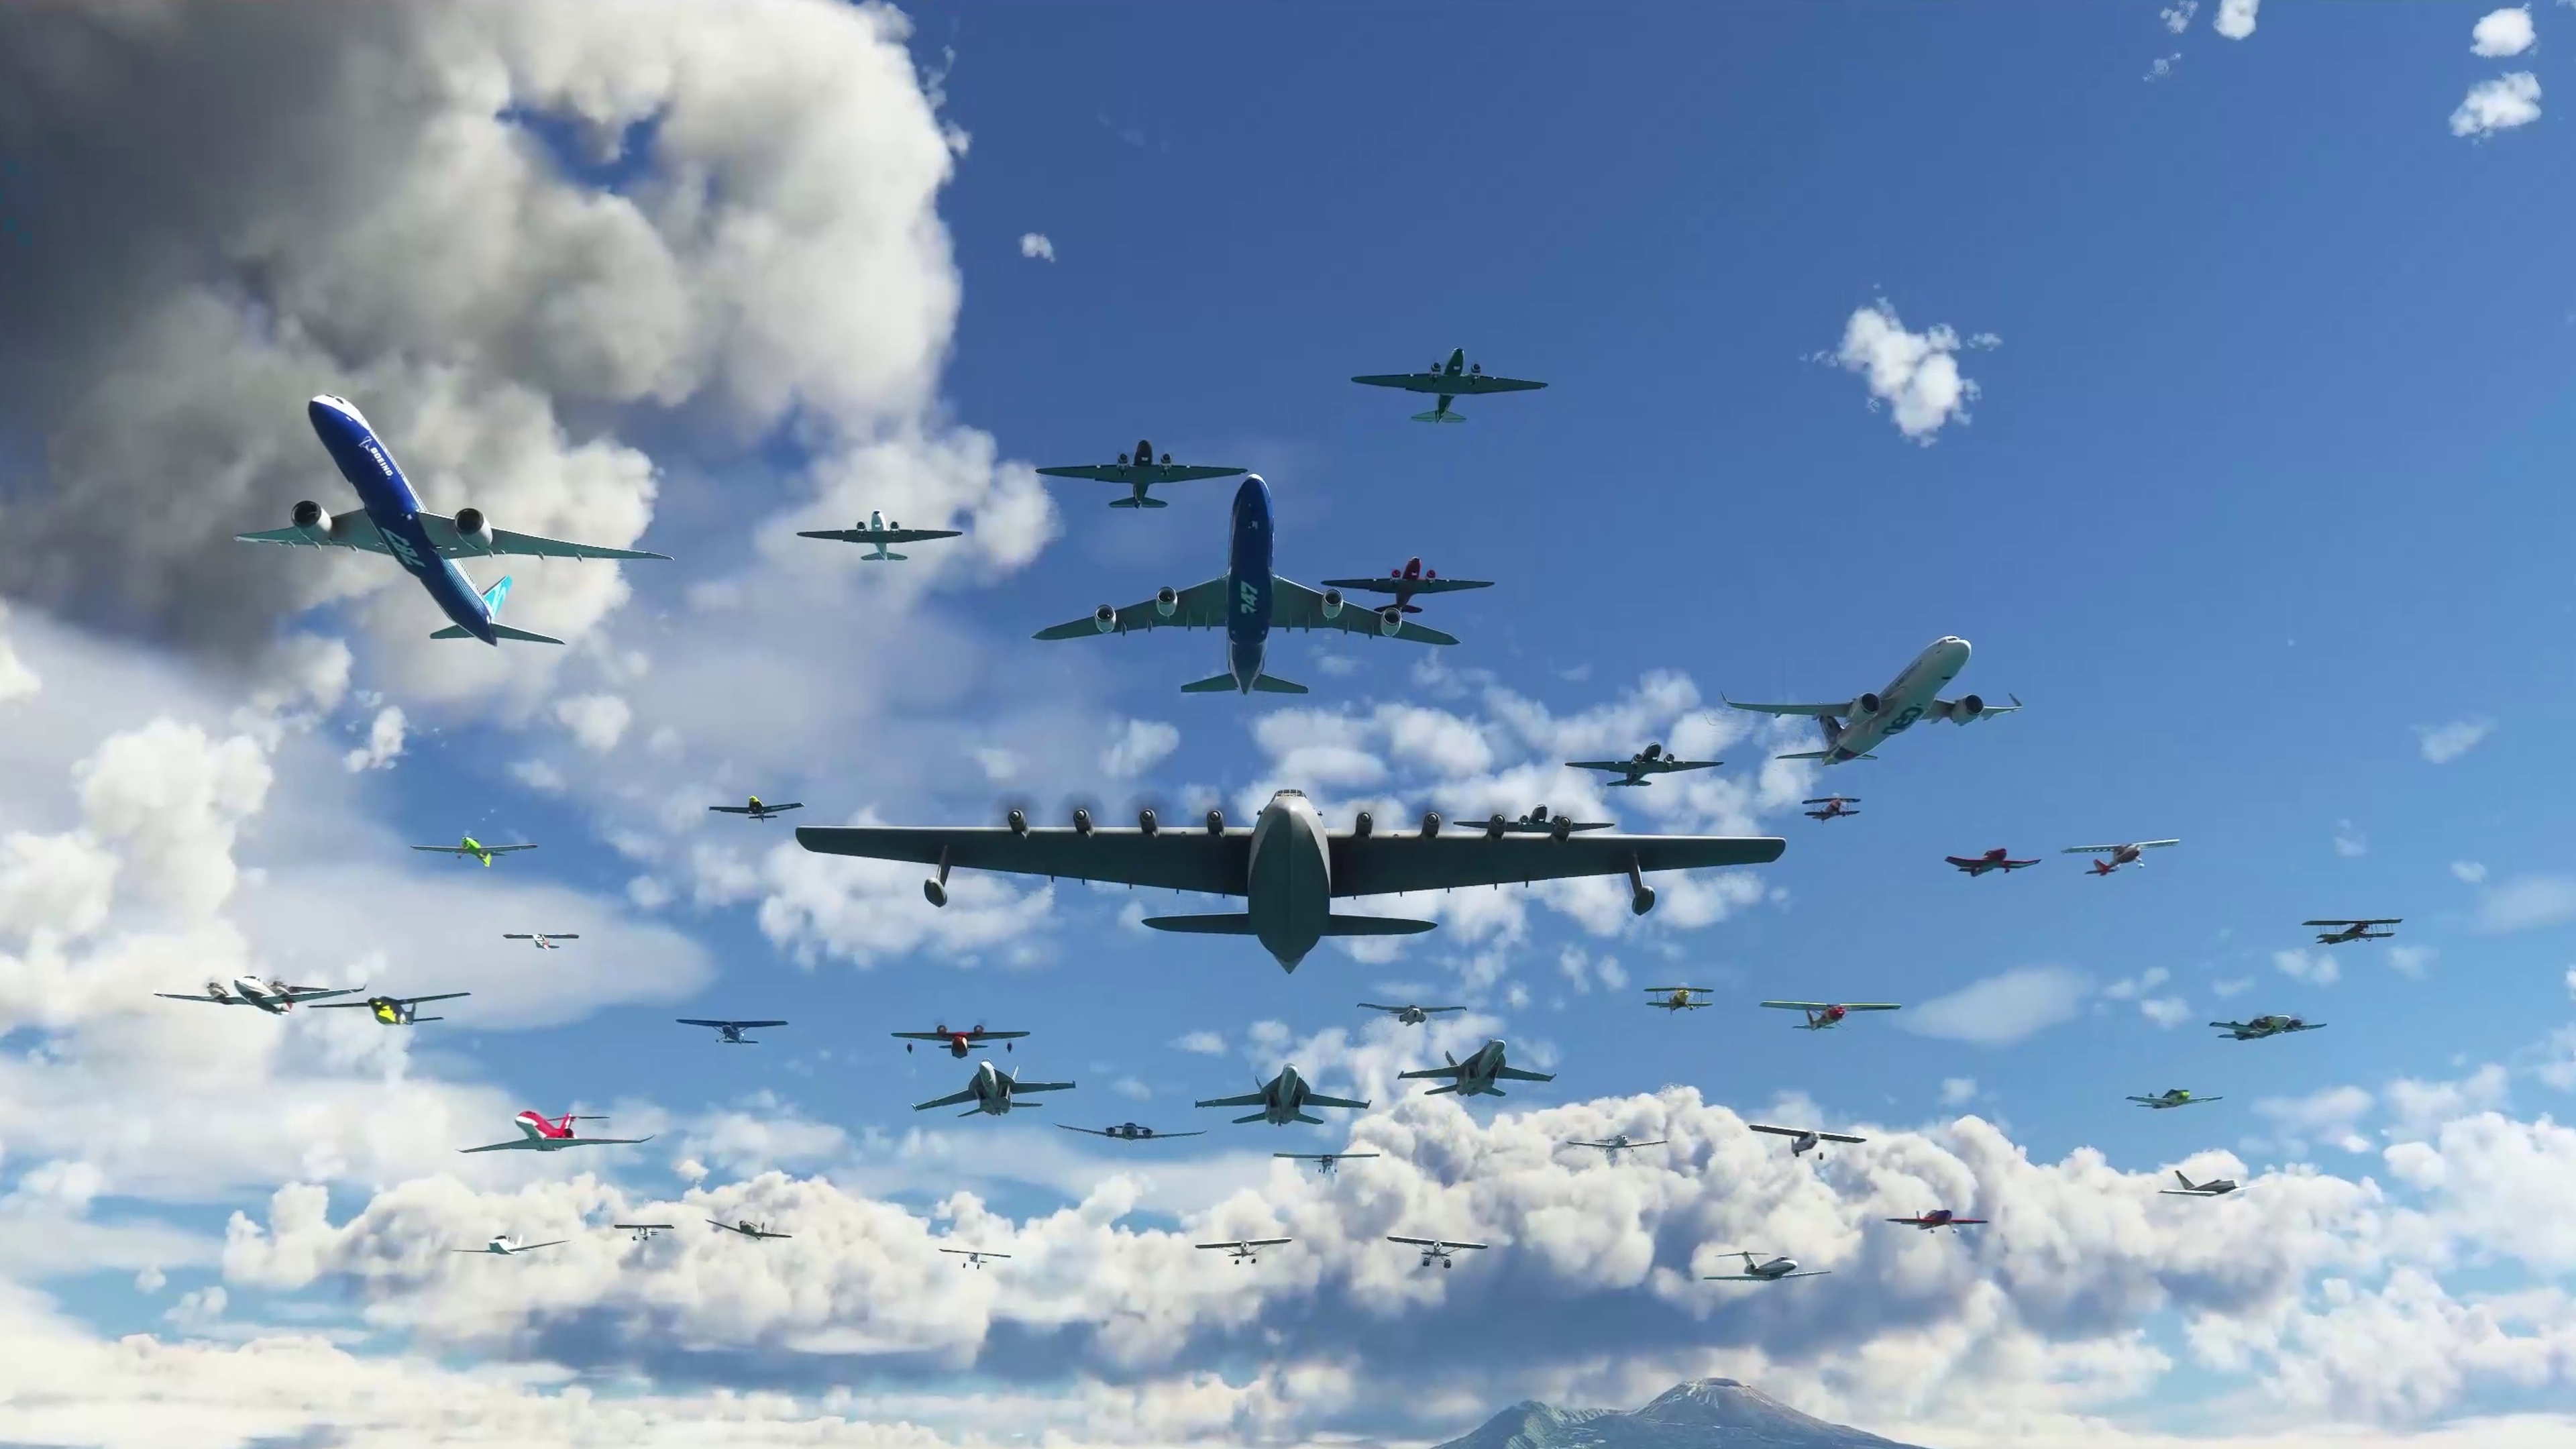 Microsoft Flight Simulator's World is Two Million Gigabytes in